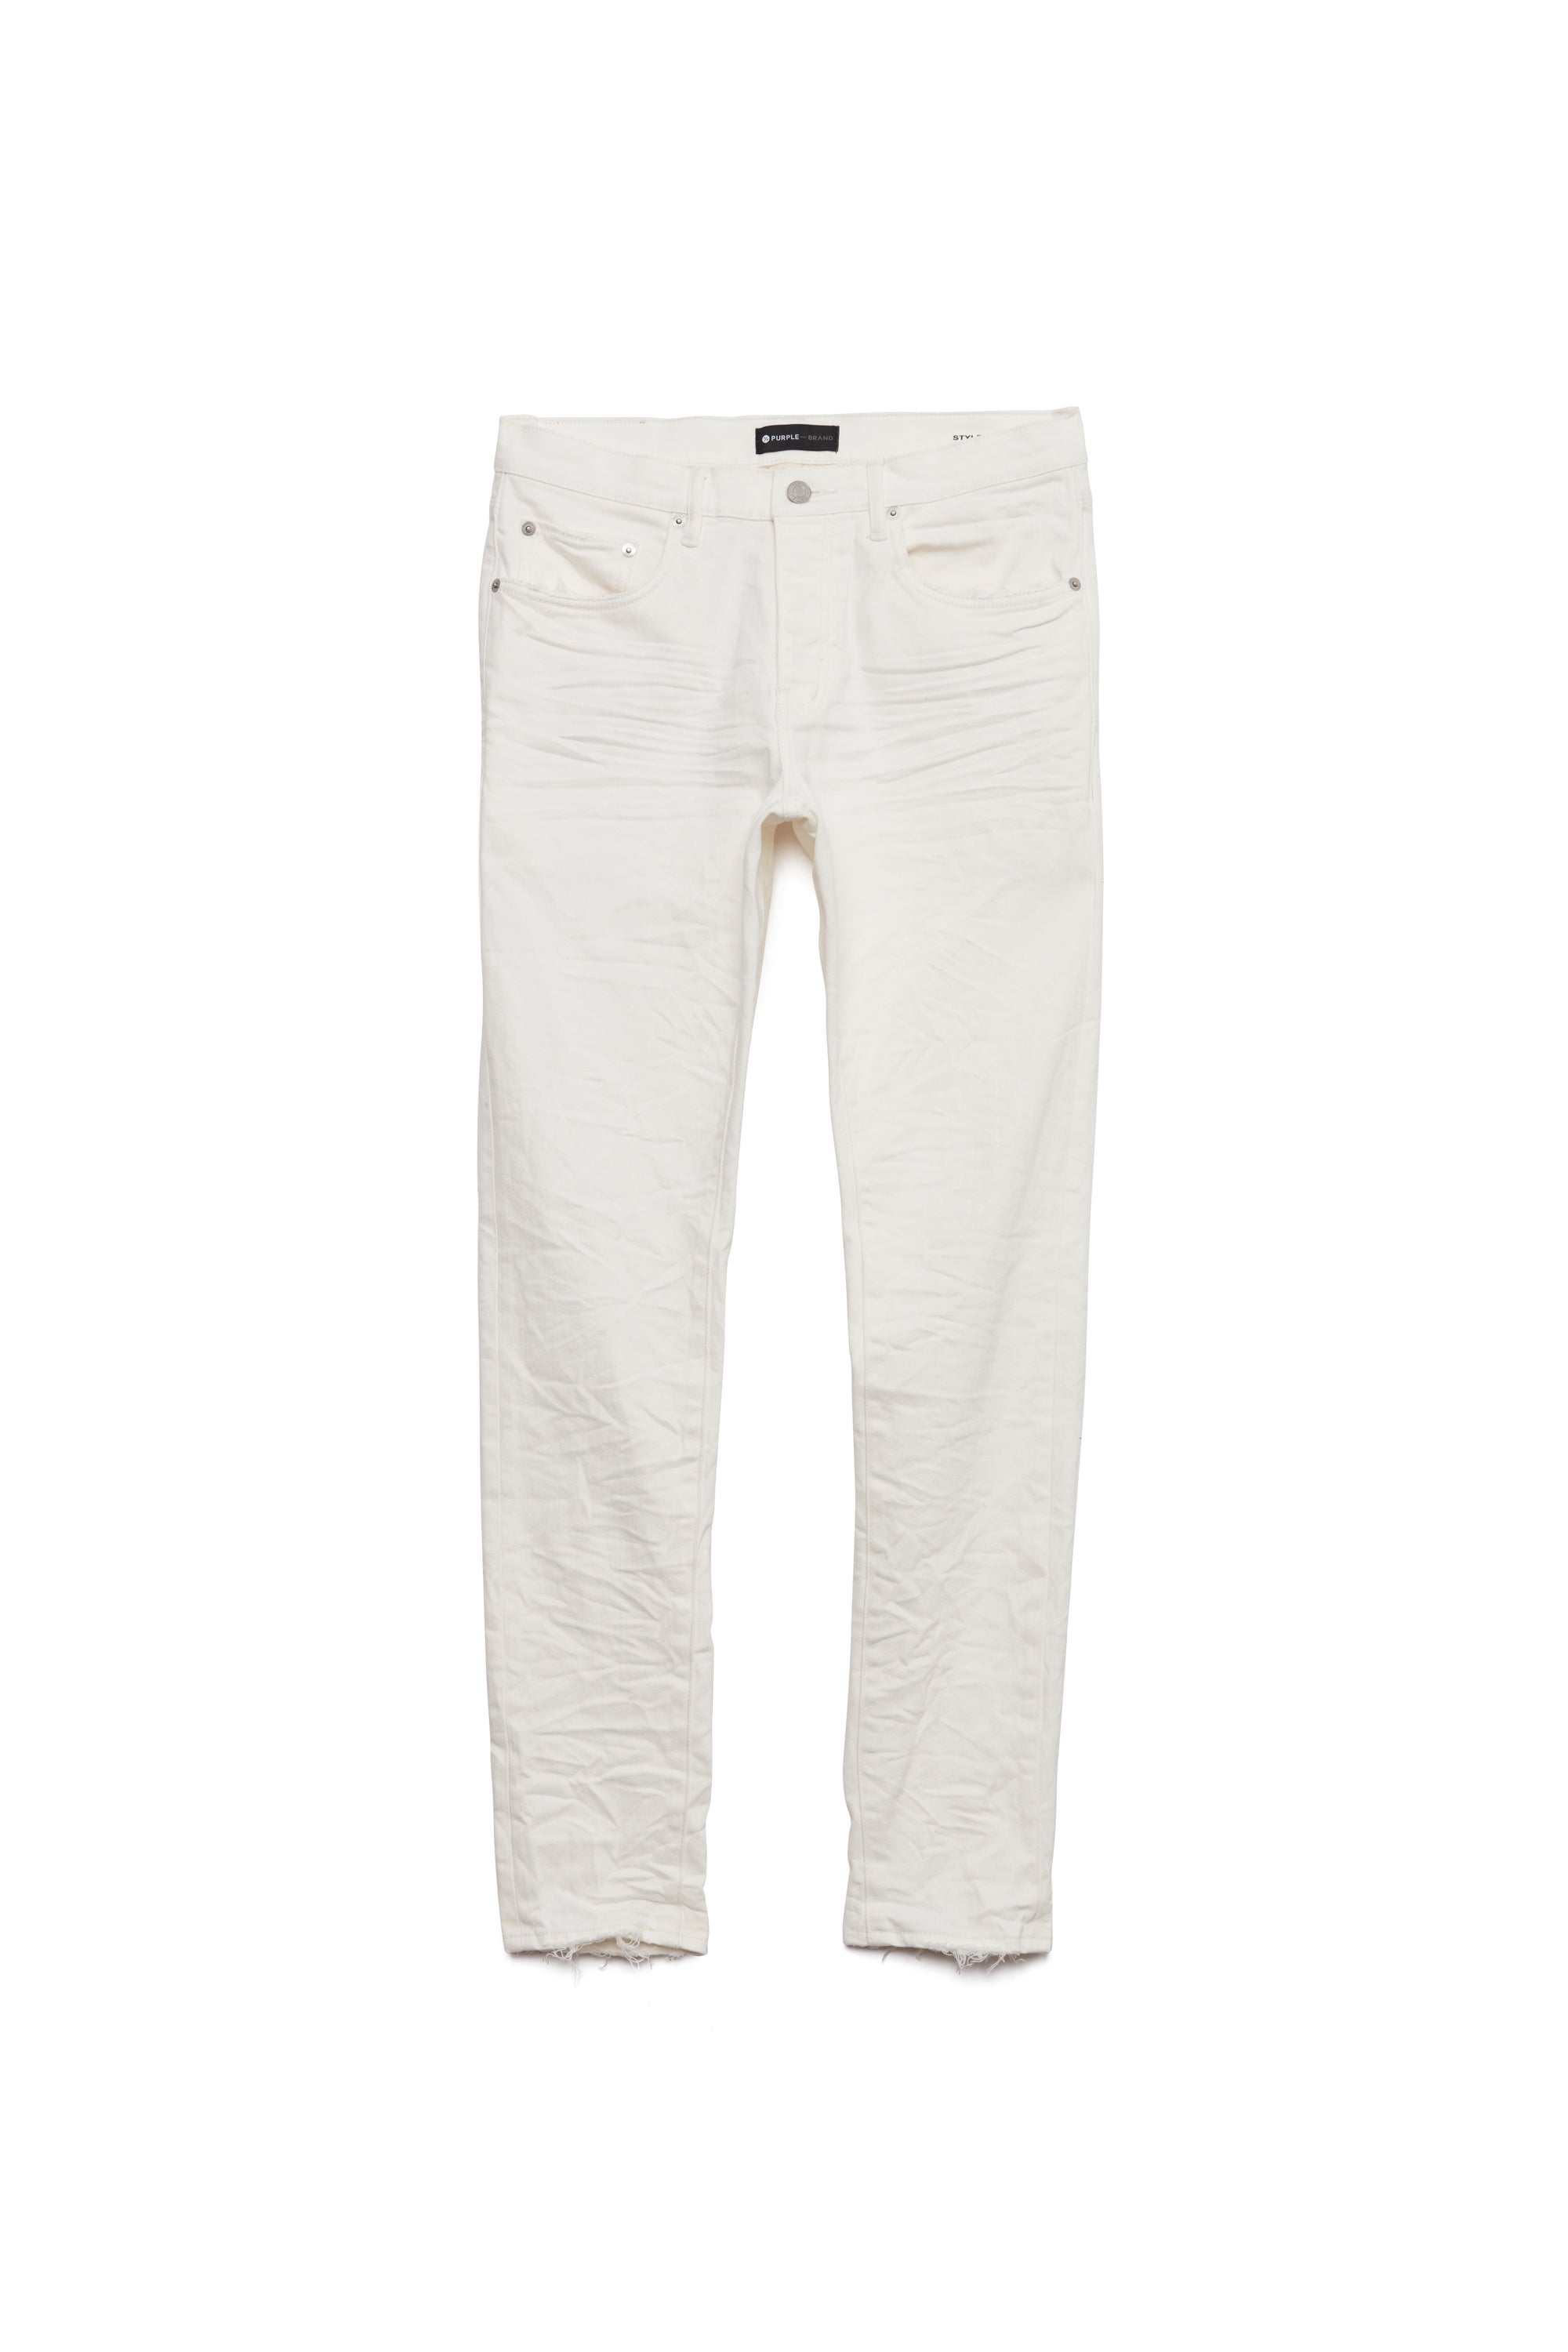 PURPLE BRAND Jeans Men, White skinny jeans White